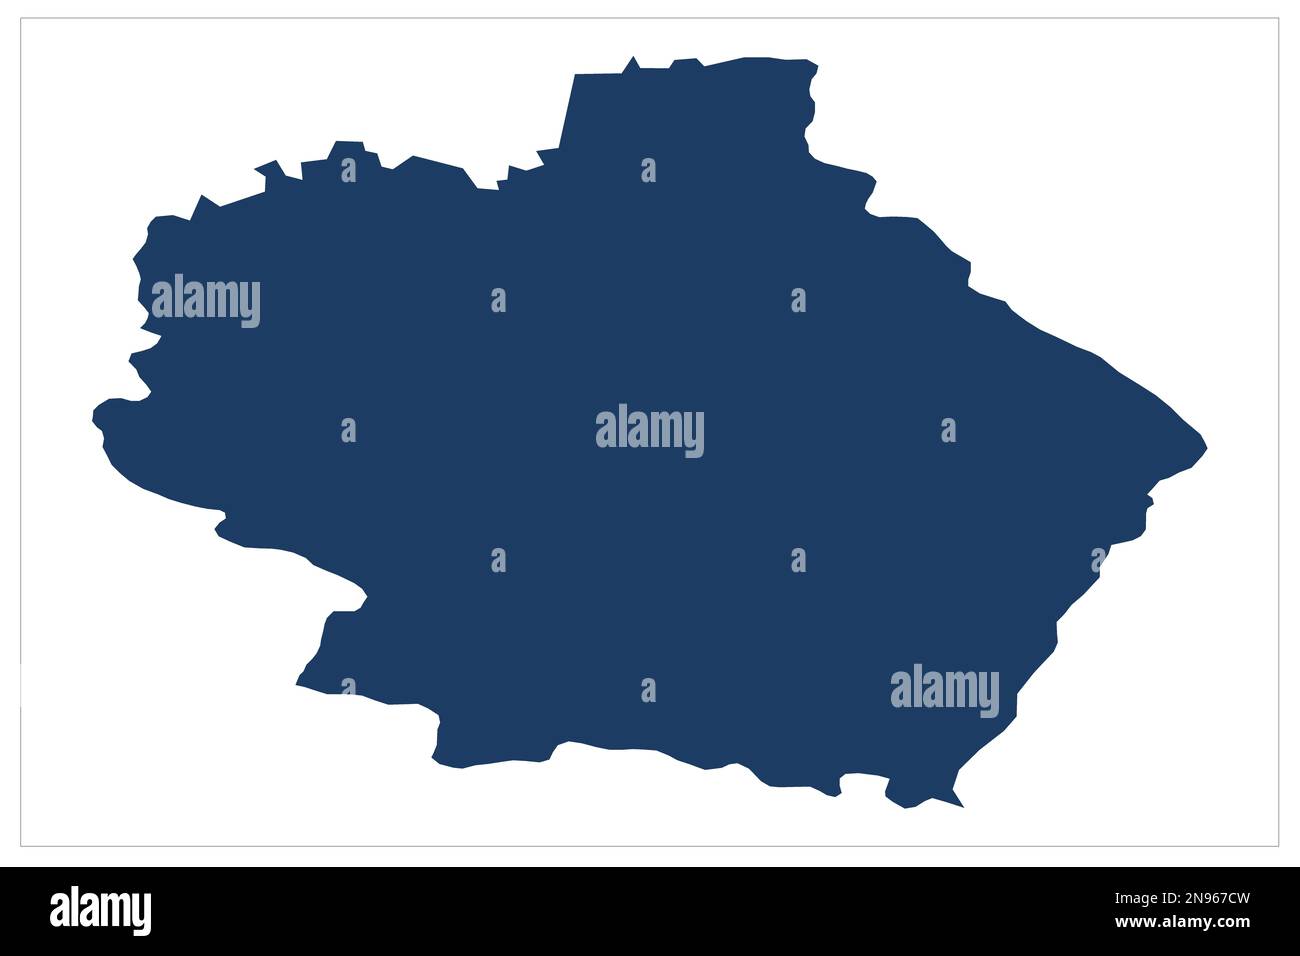 Oblast Tambovskaya , Oblast Tambav Russland State Province Oblast Illustration auf weißem Hintergrund mit blauer Farbe , Karte Russlands Stockfoto